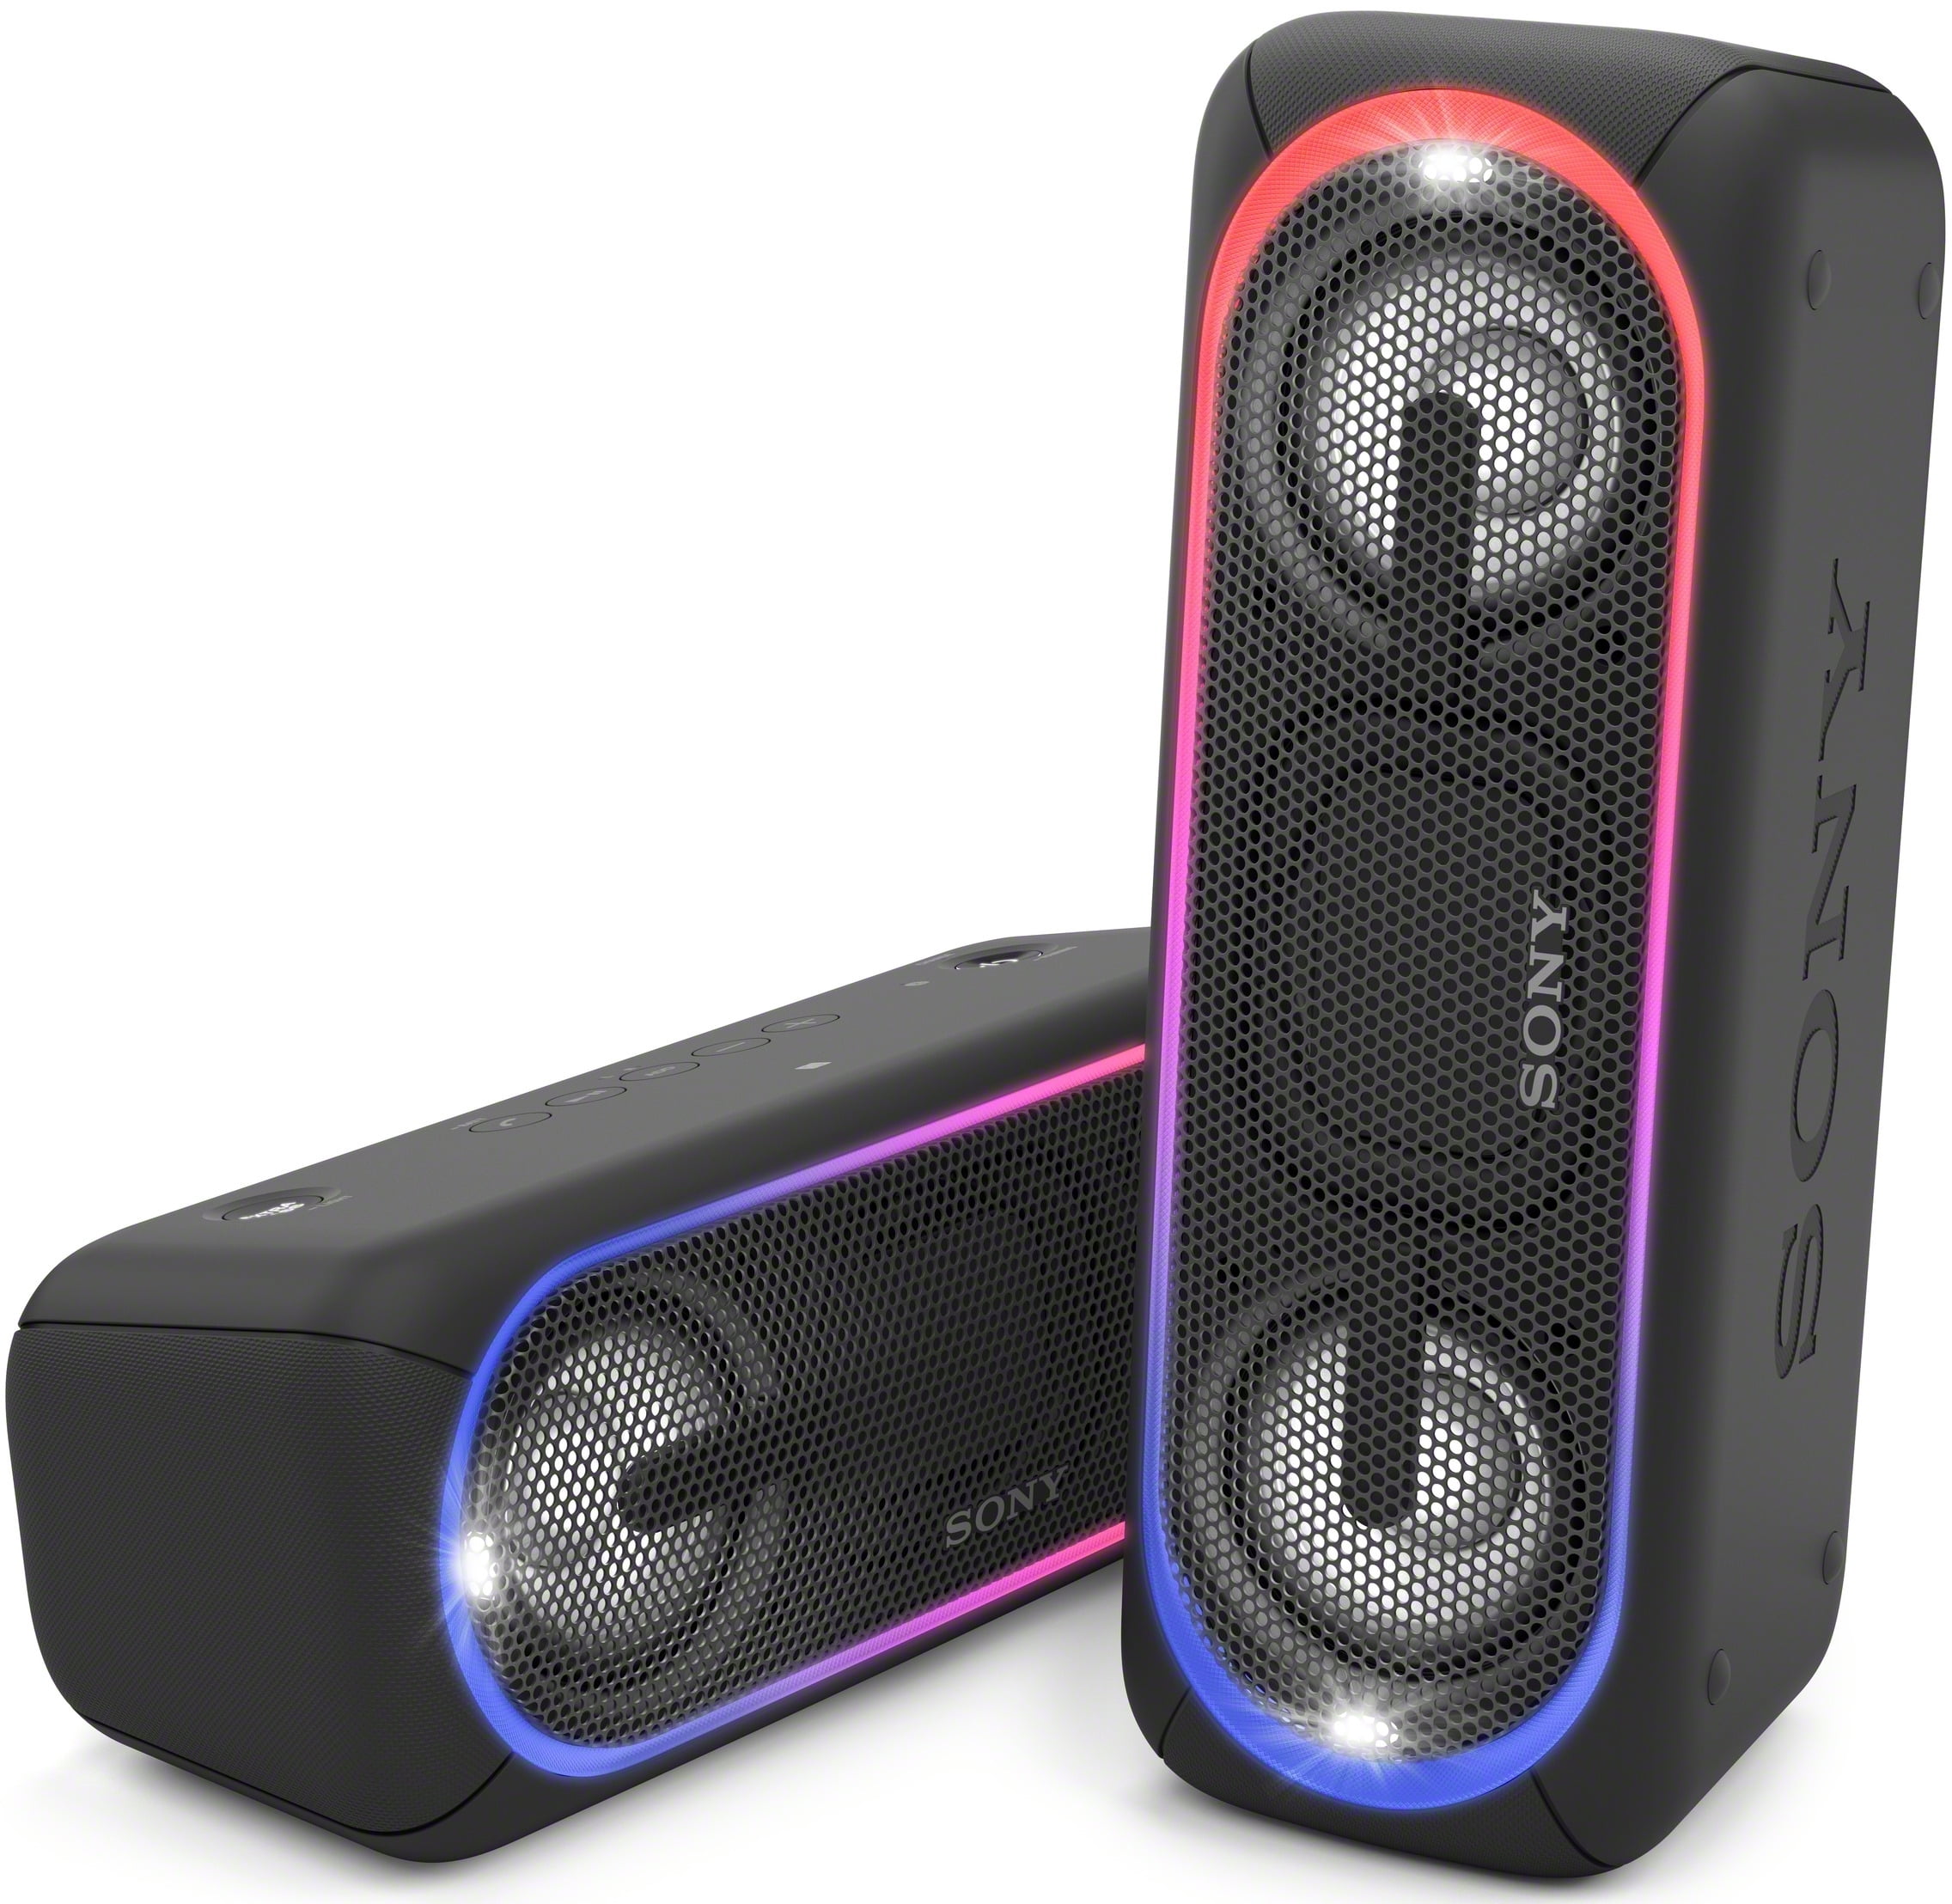 SONY SRS-XB40/BLK Portable Wireless Speaker - Walmart.com